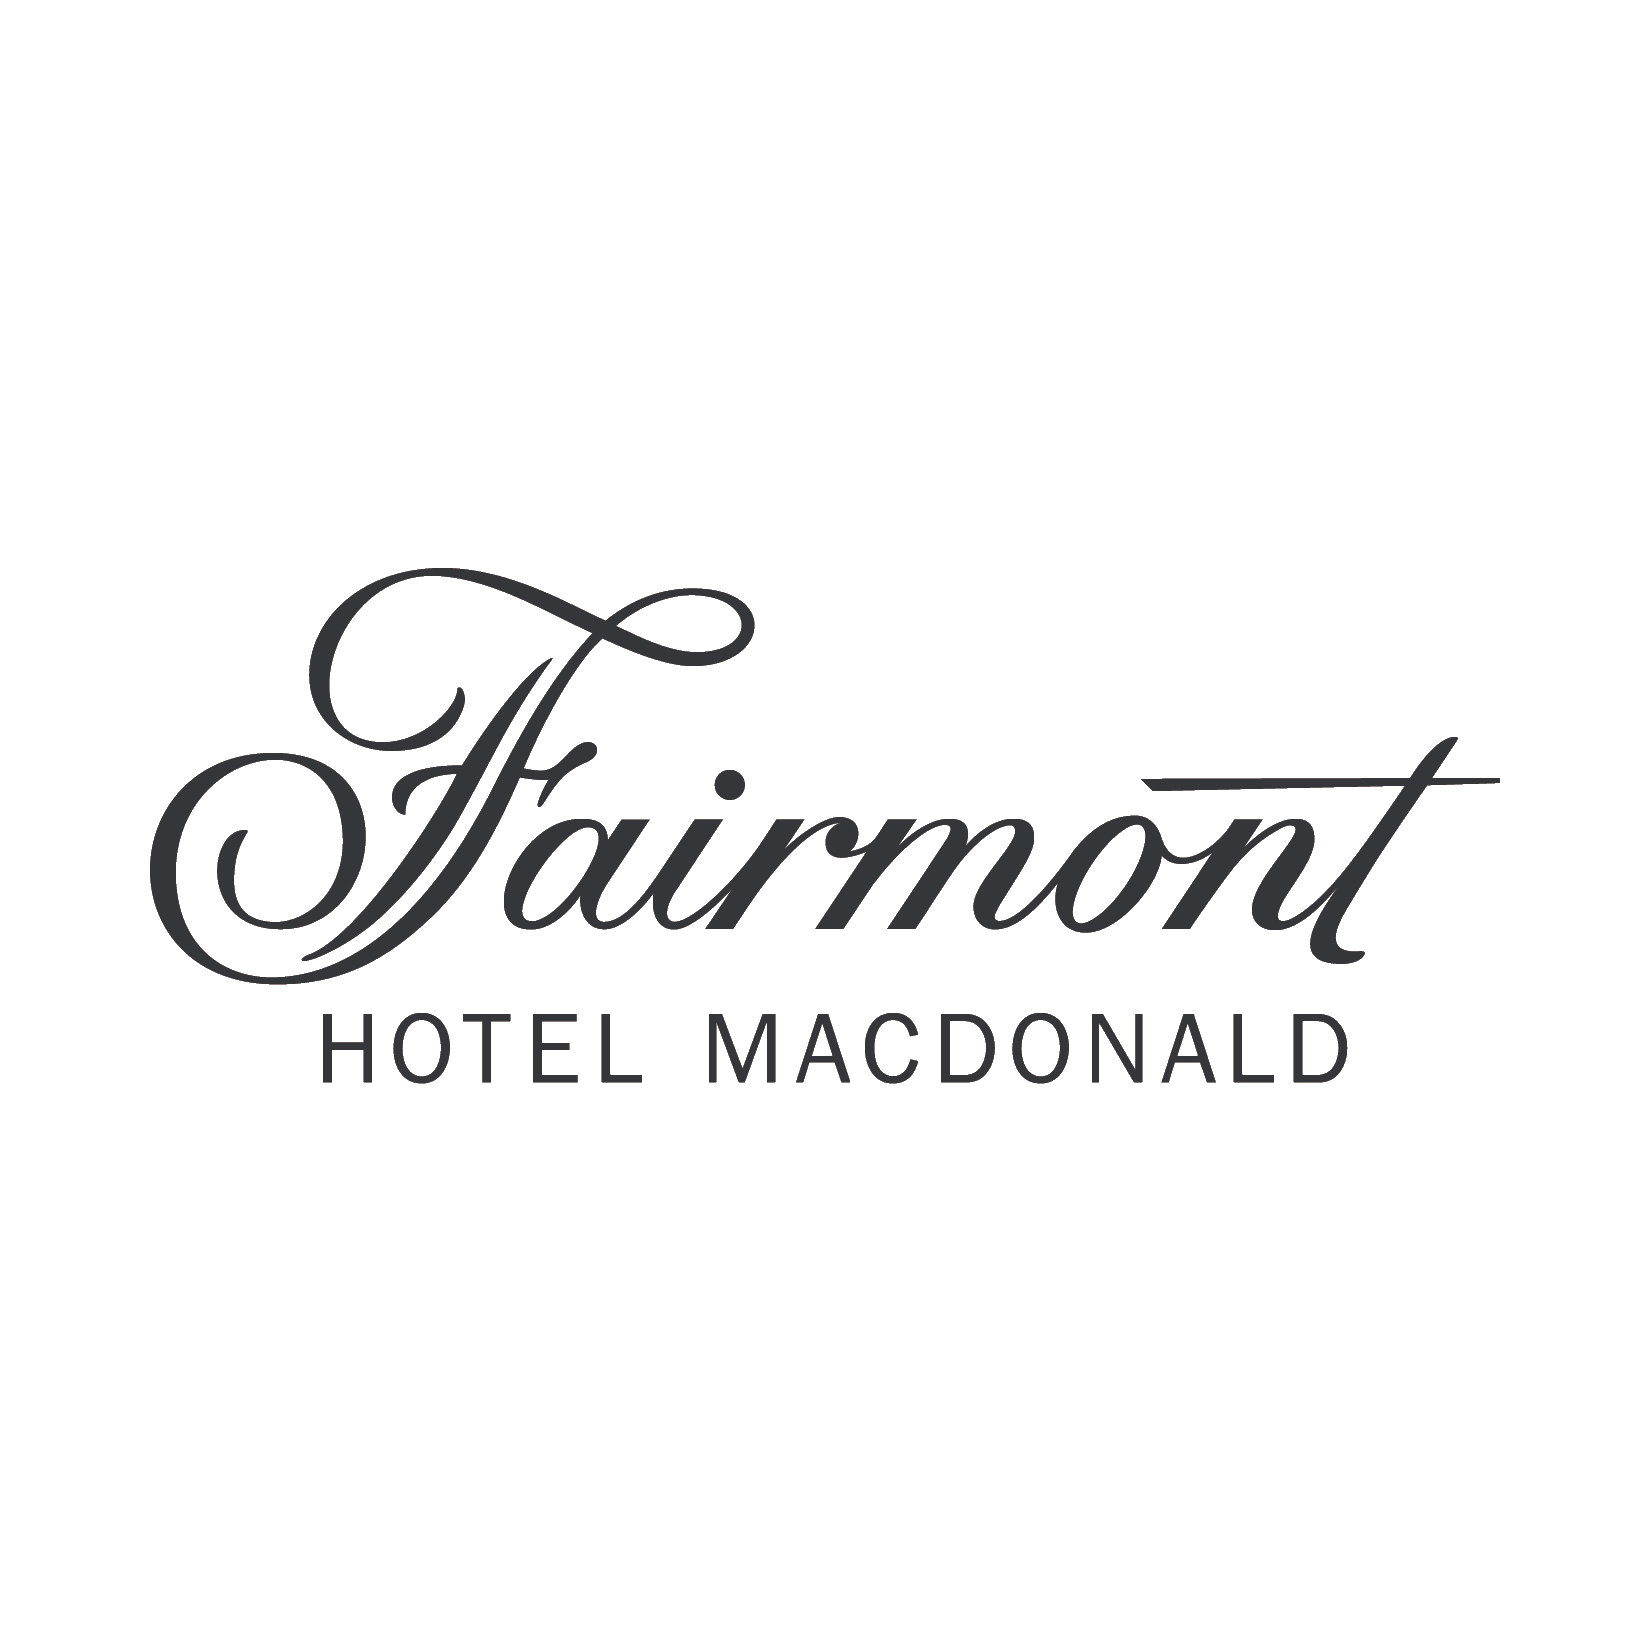 Fairmont Hotel Macdonald